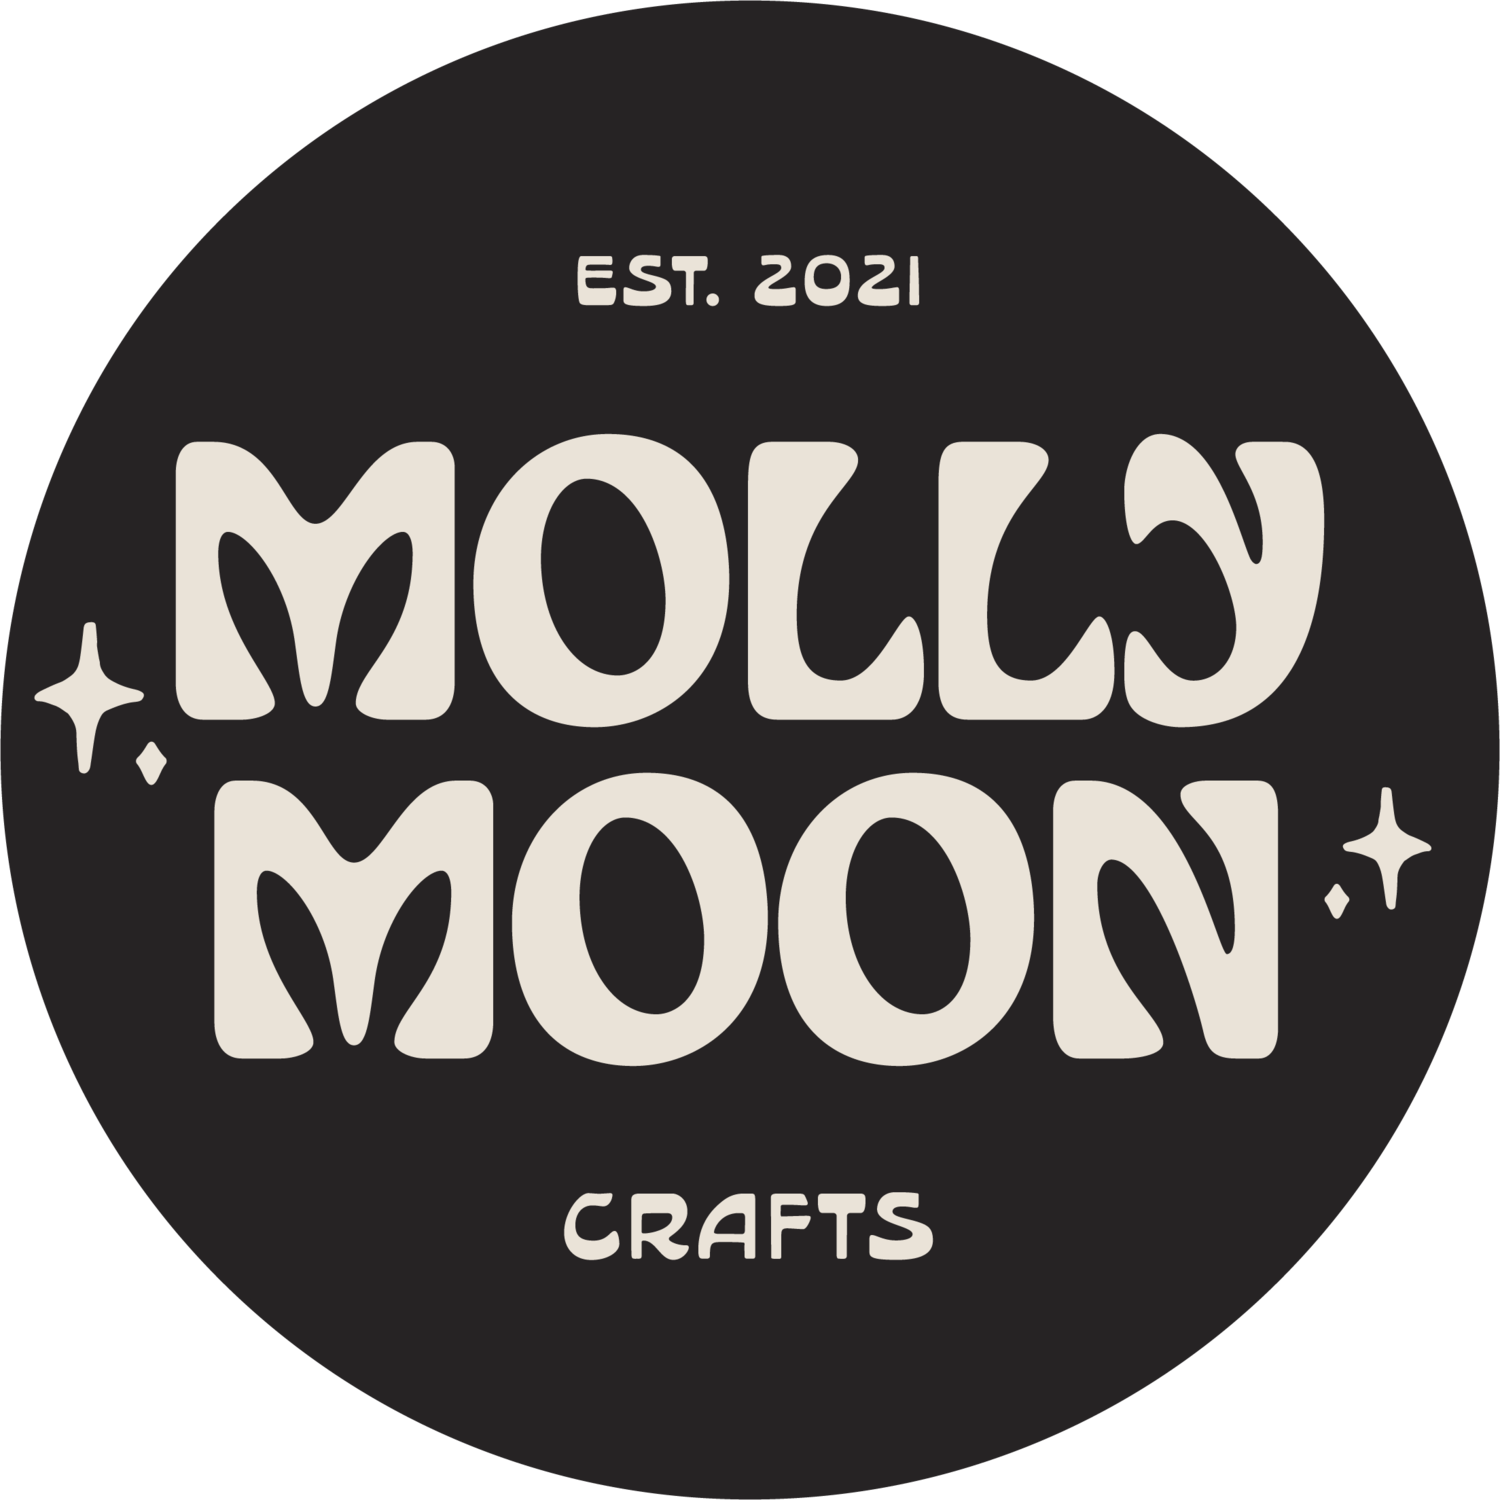 Molly Moon Crafts